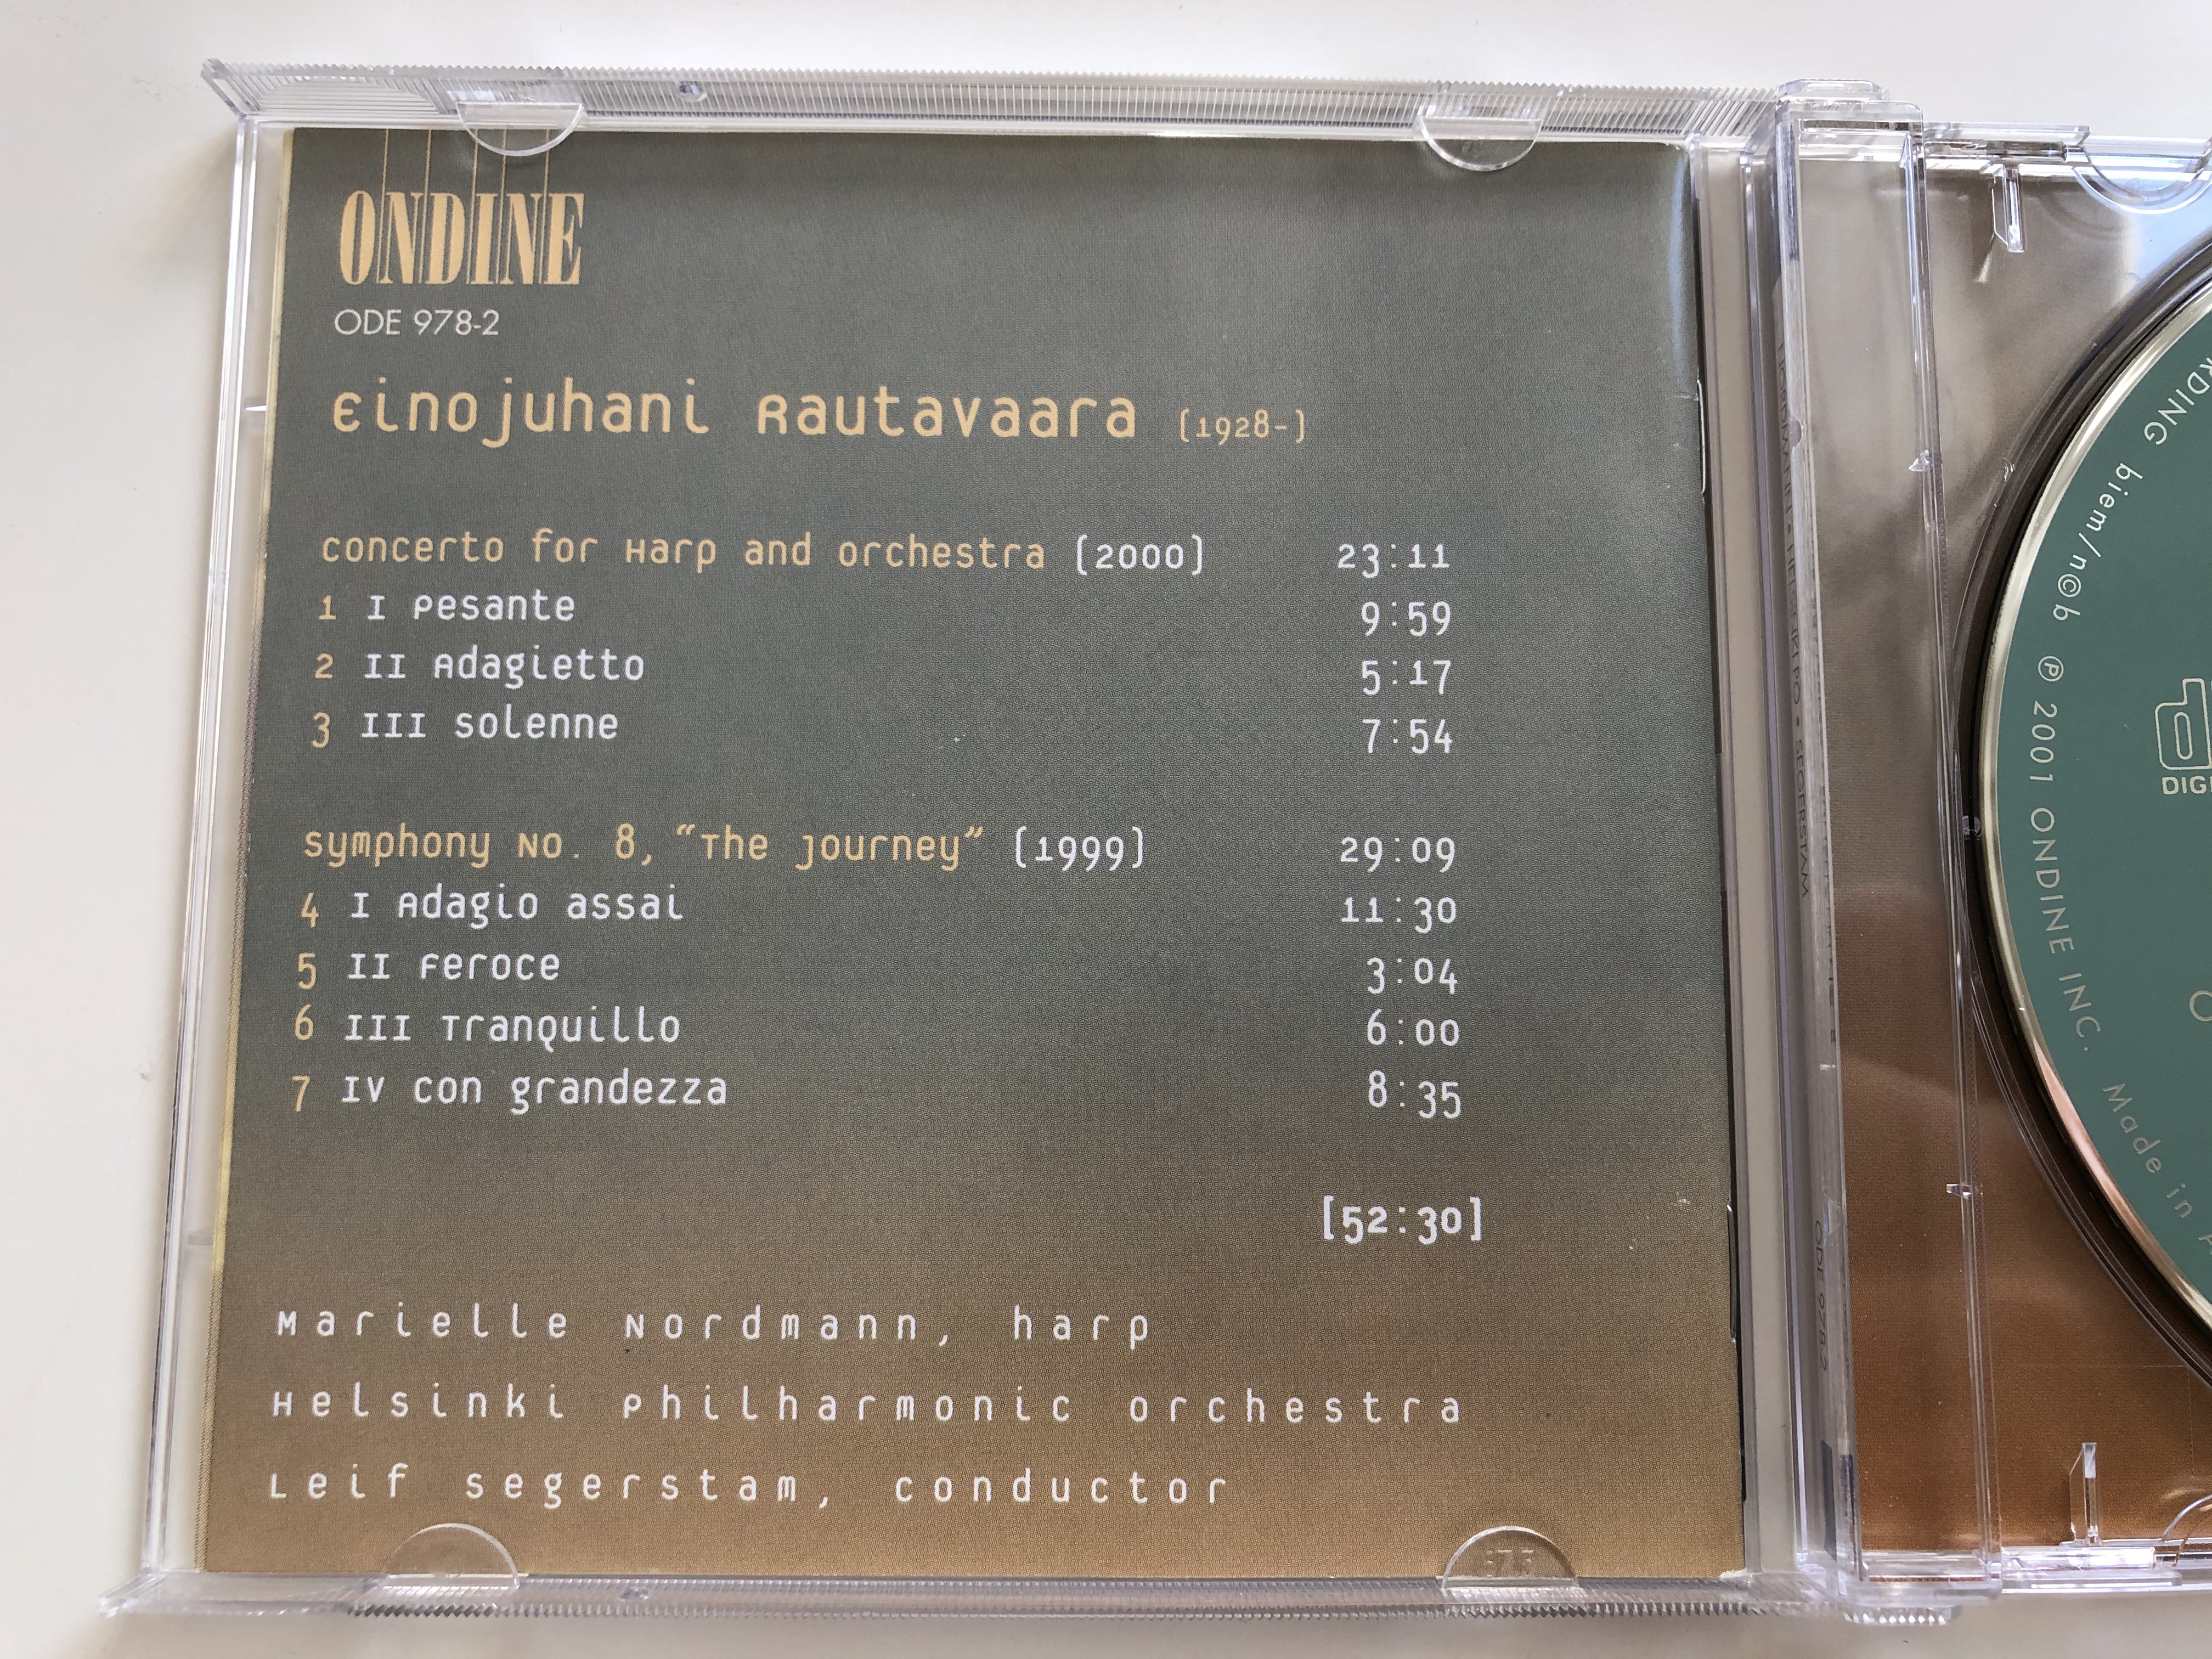 rautavaara-symphony-no.-8-the-journey-harp-concerto-harp-marielle-nordmann-helsinki-philharmonic-orchestra-leif-segerstam-ondine-audio-cd-2001-ode-978-2-7-.jpg